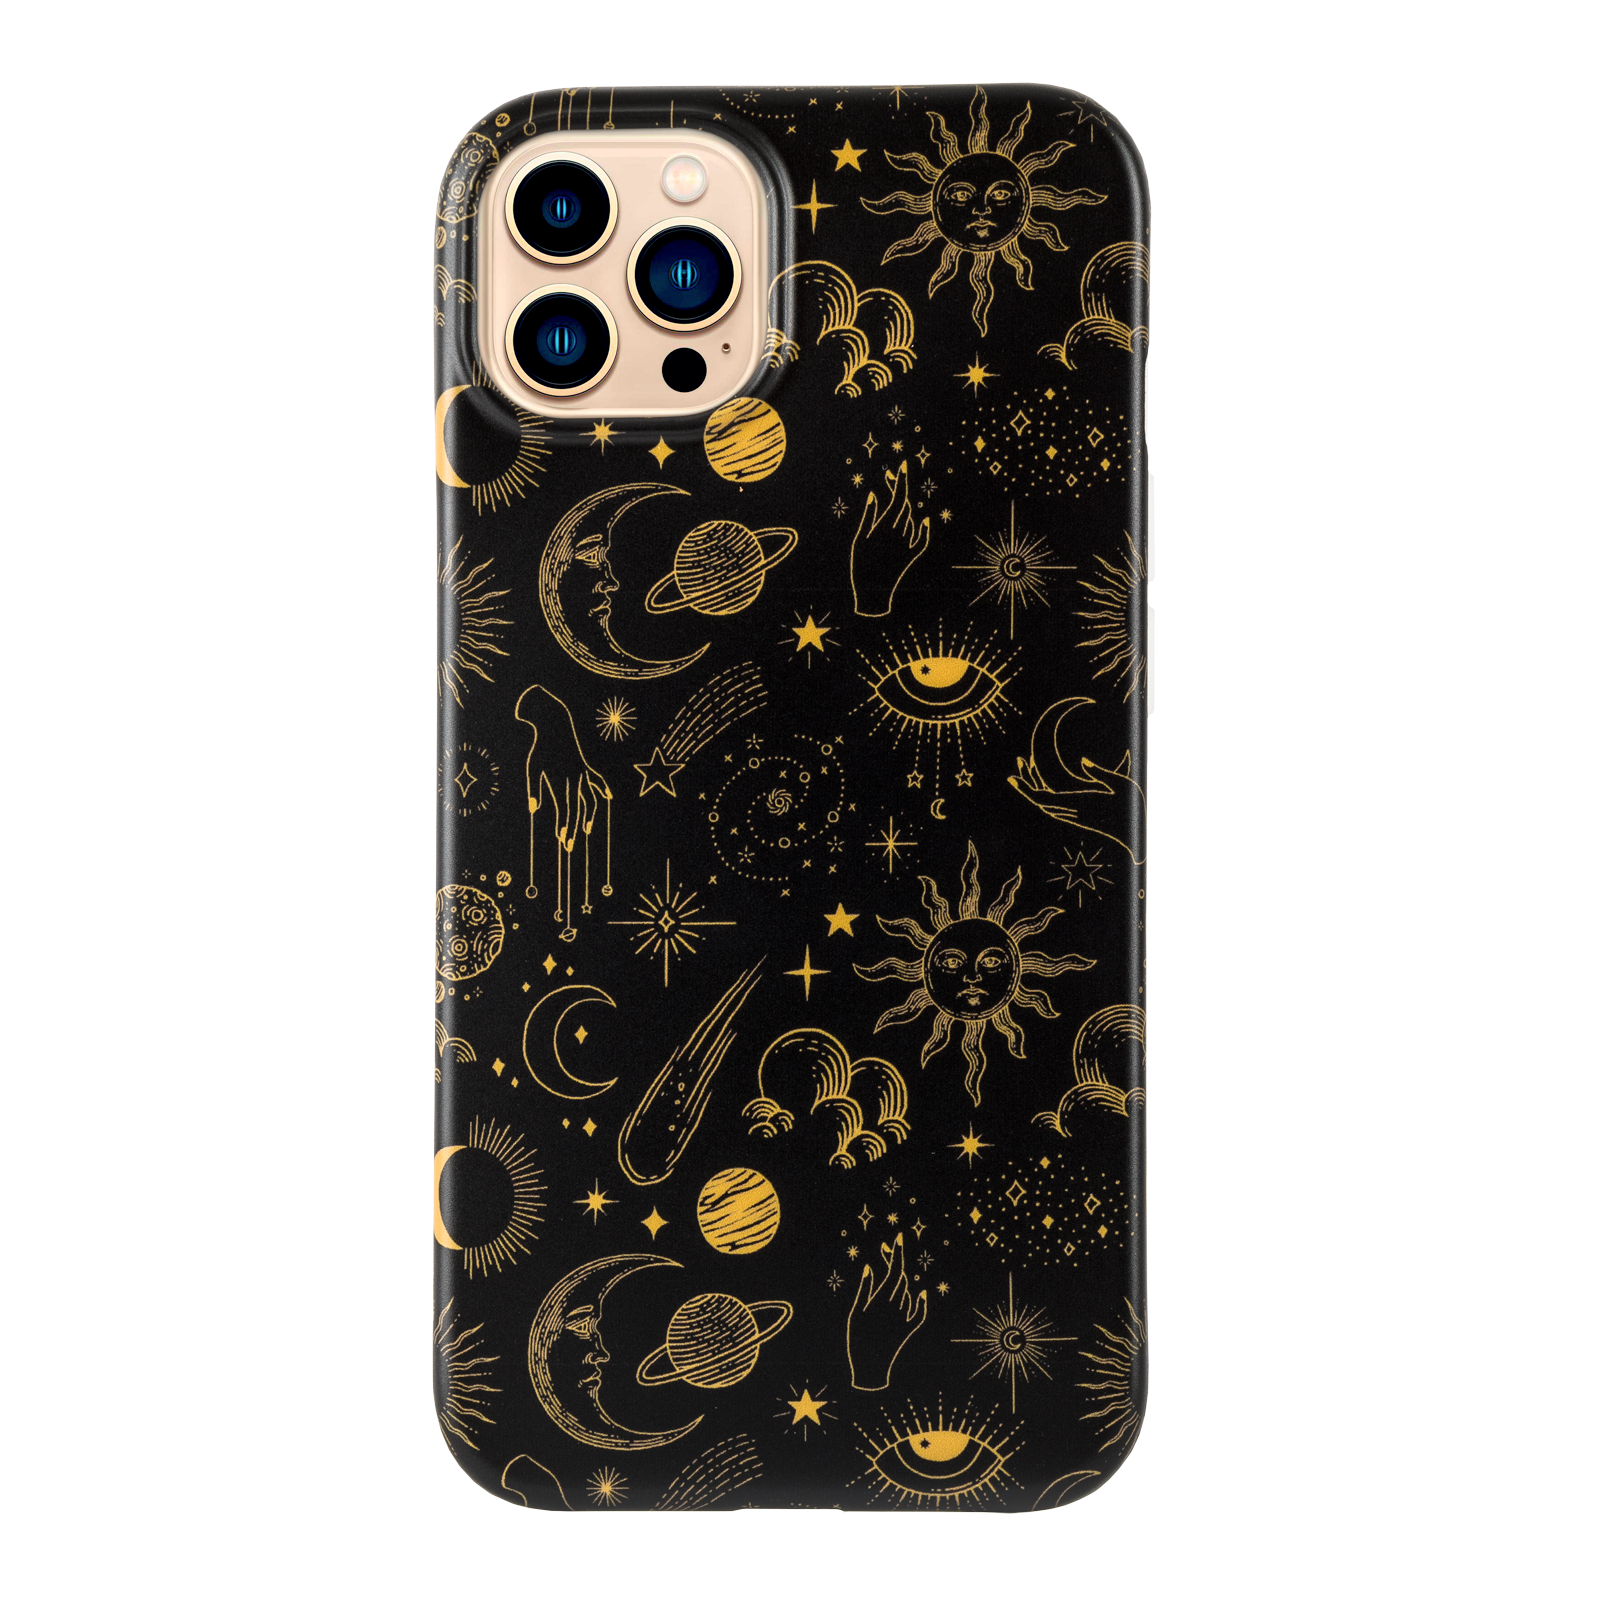 Celestial iPhone Case